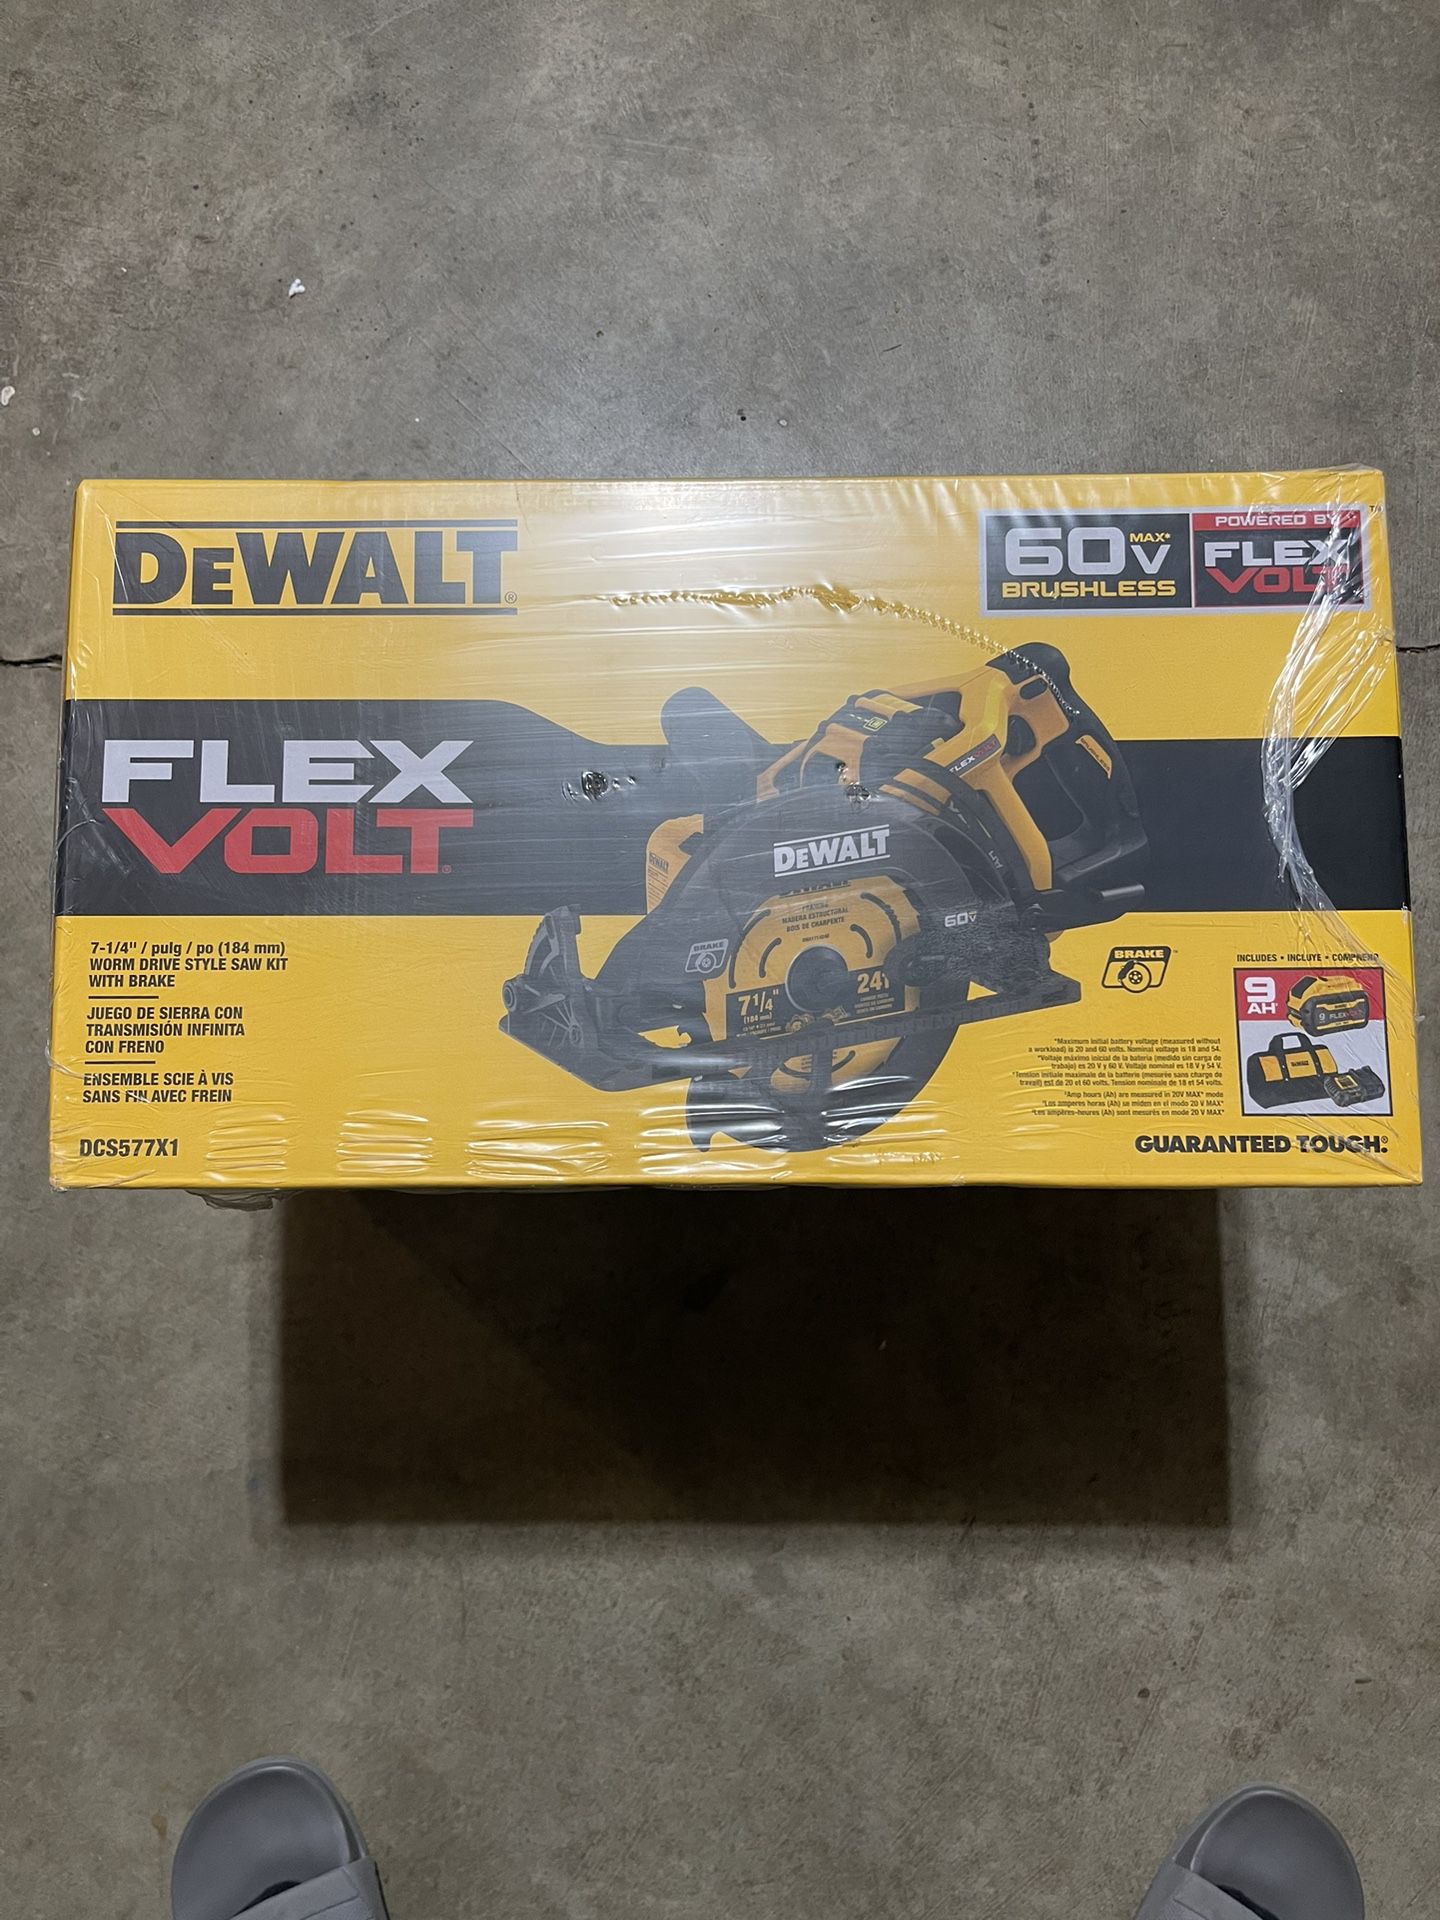 DEWALT Flexvolt 60v MAX 7-1/4 in cordless work drive style saw with 9.0AH battery kit